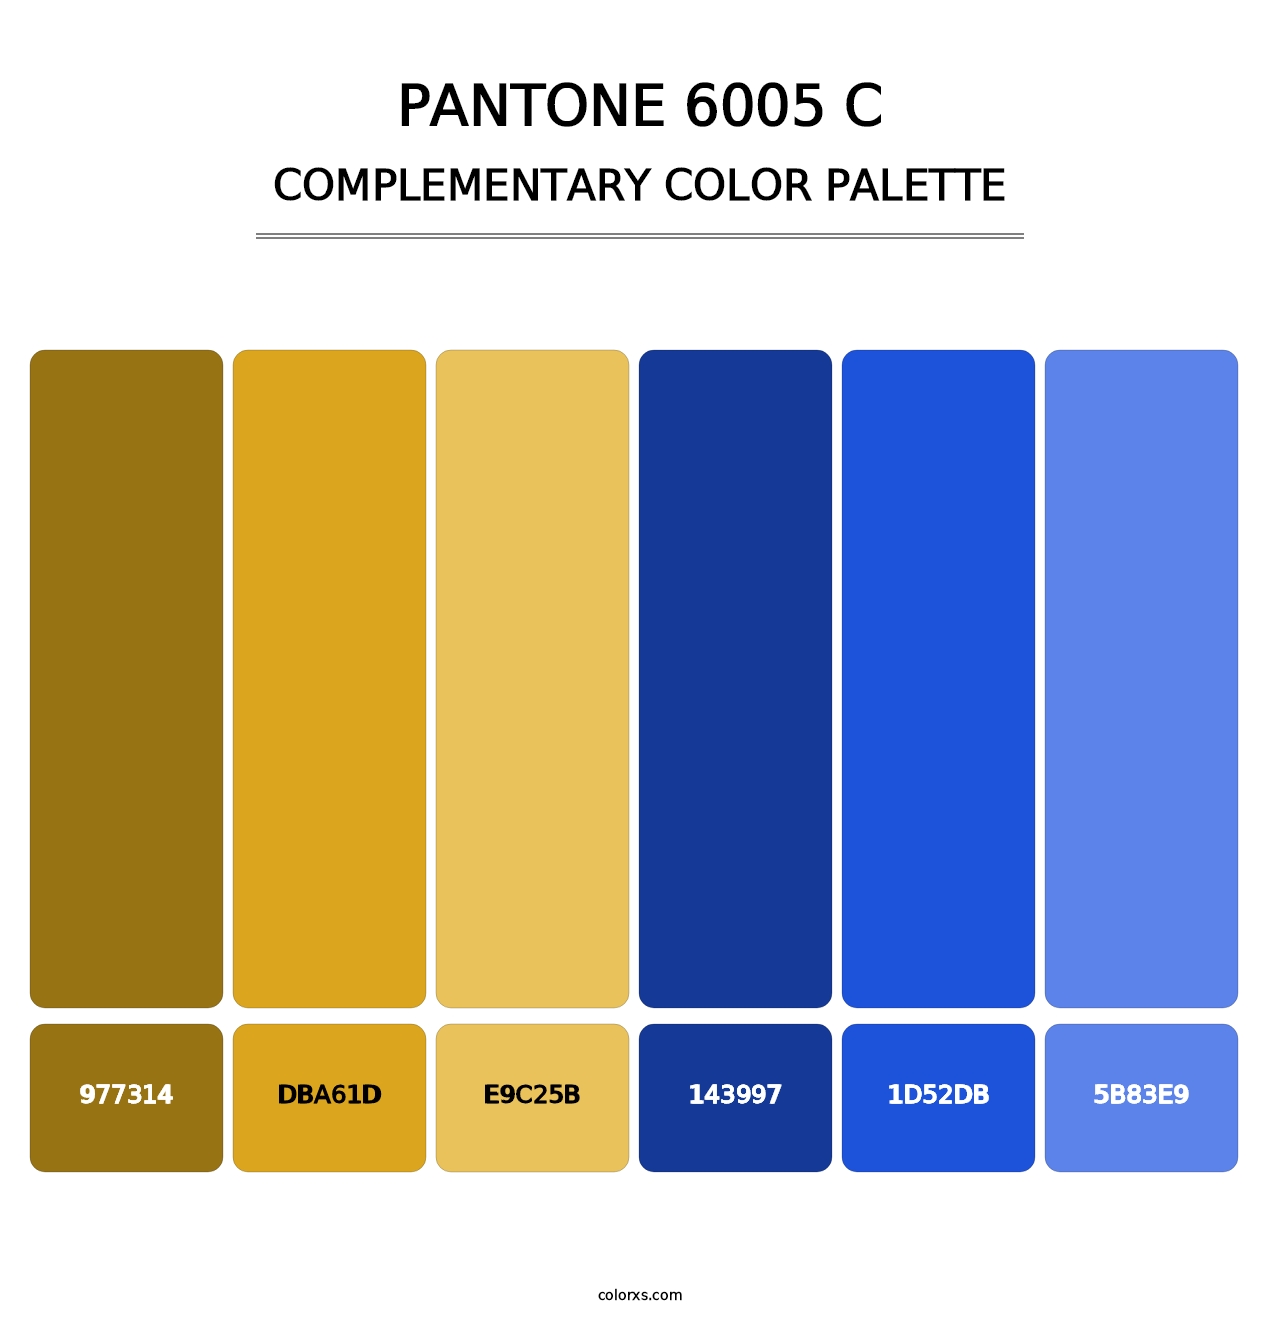 PANTONE 6005 C - Complementary Color Palette